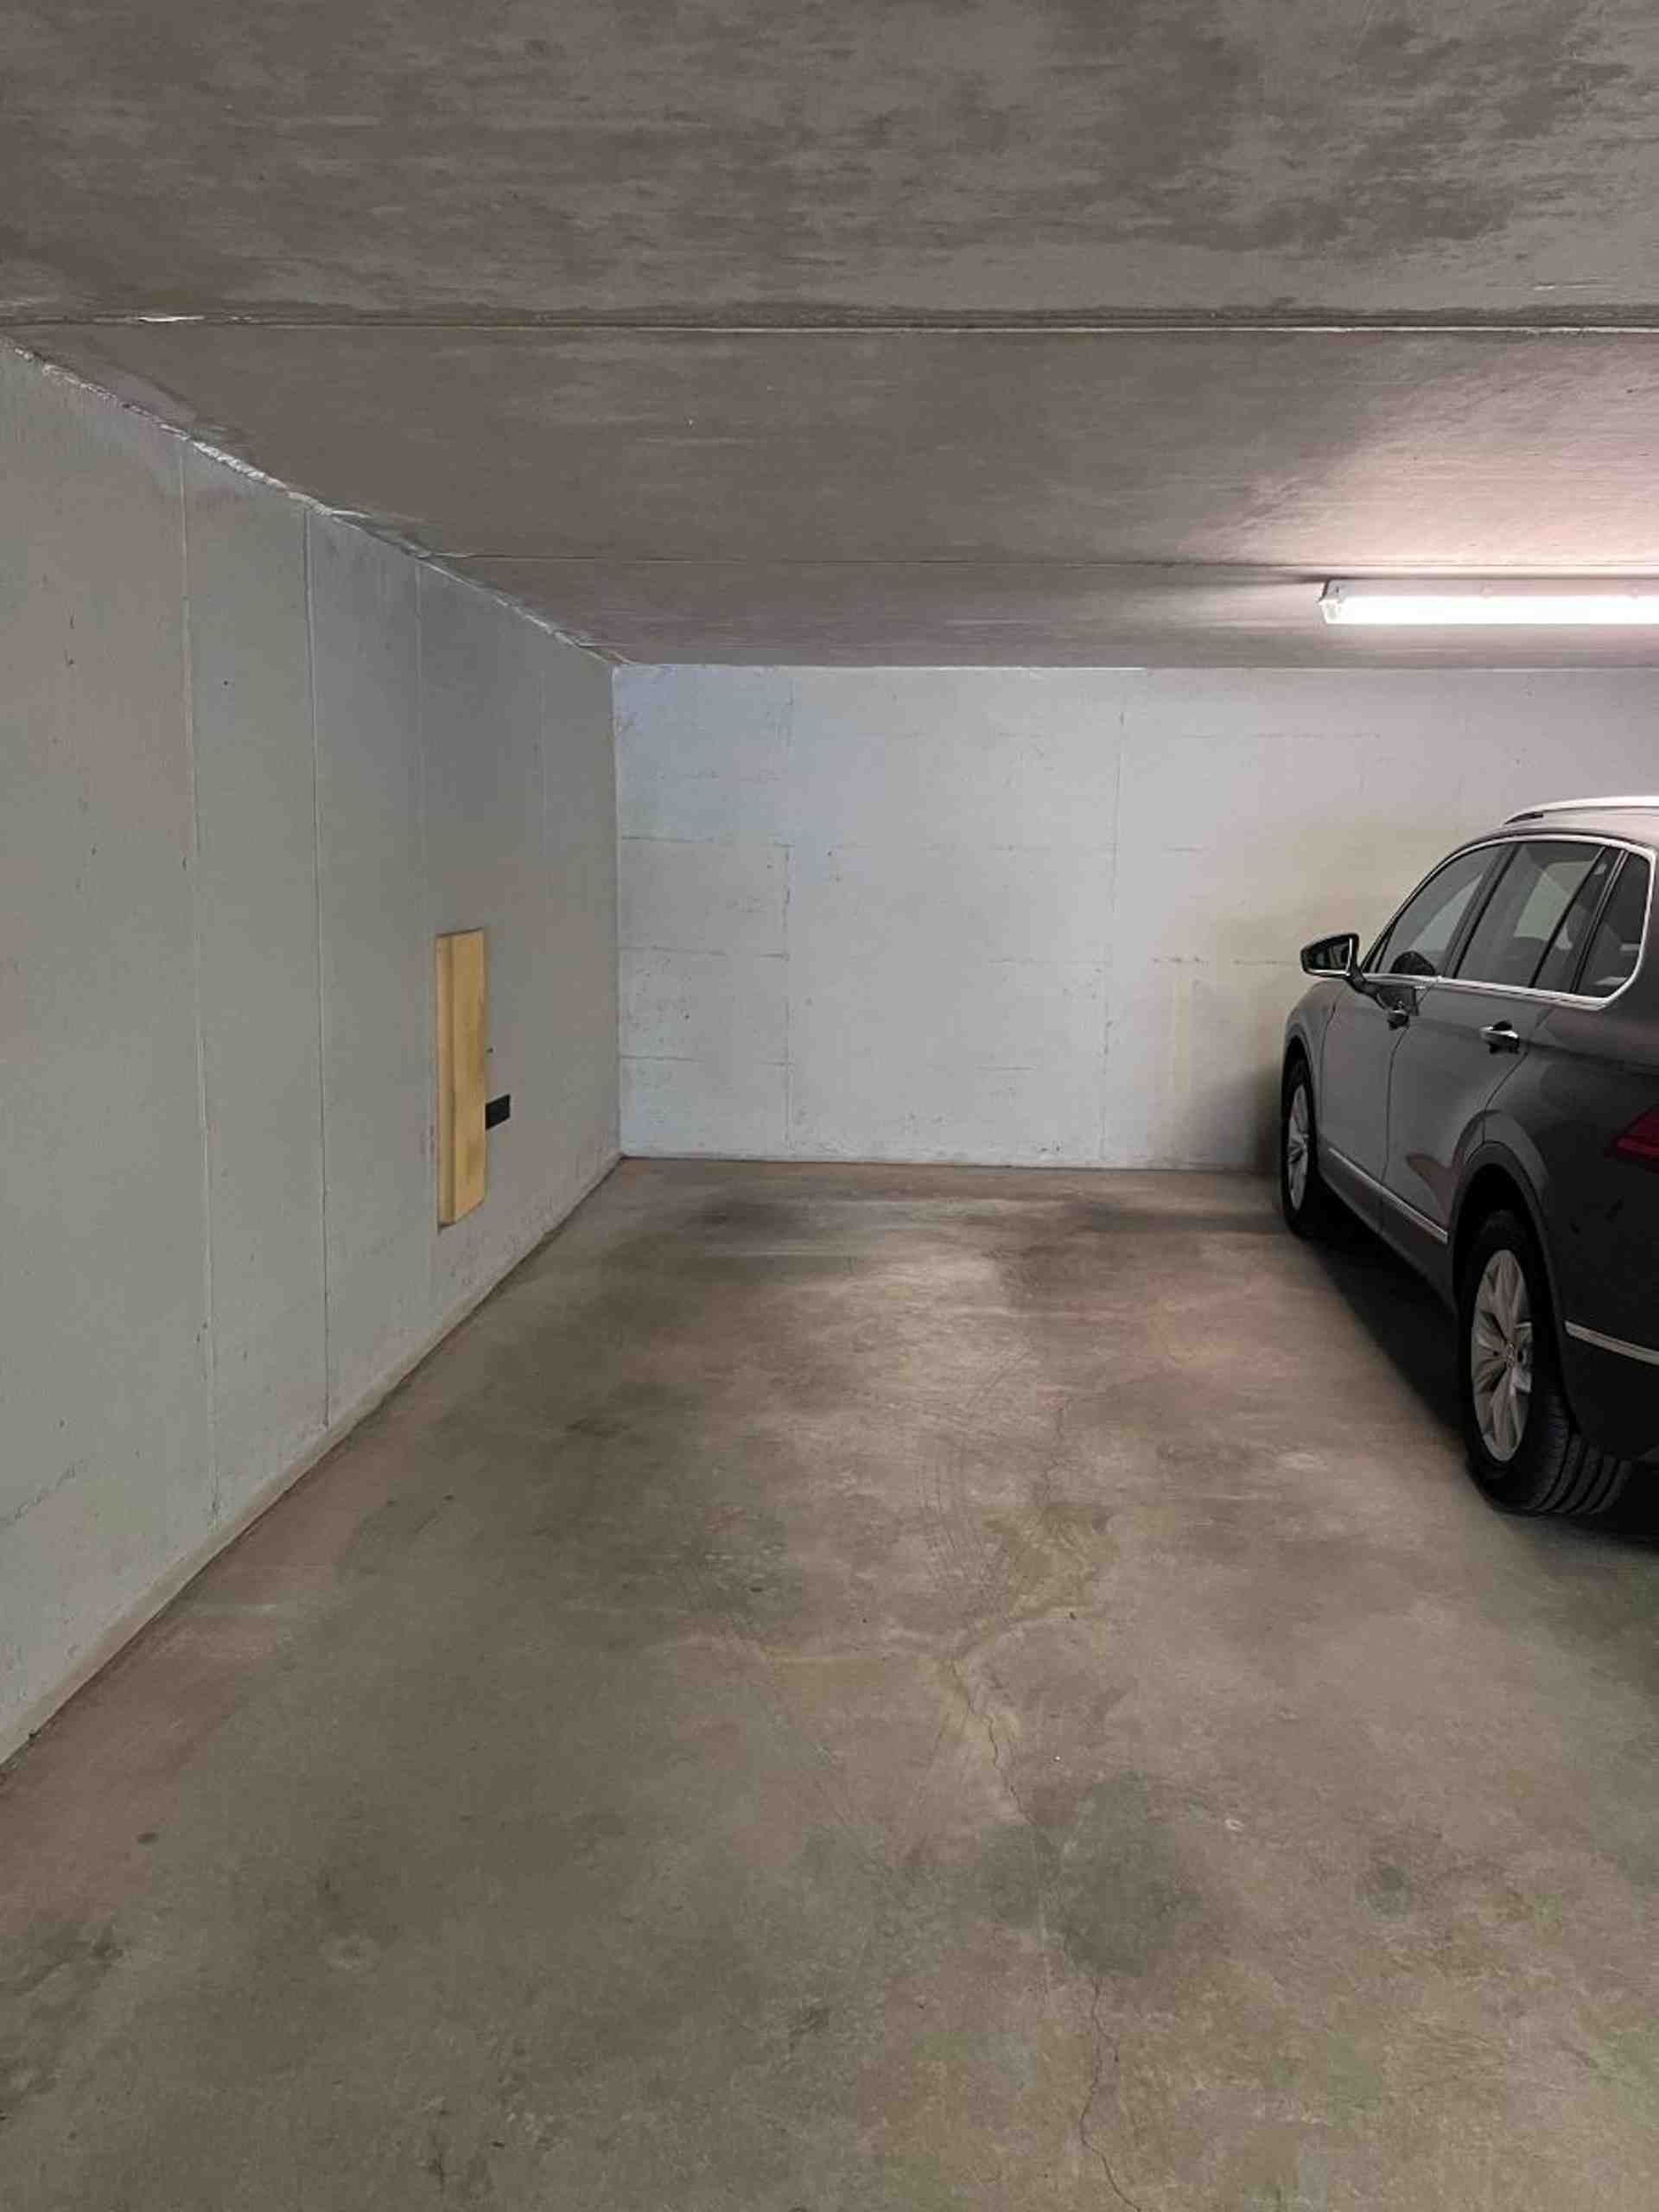 Car Parking Space - Turiner Straße, 60598 Frankfurt - Fotka 1 z 1